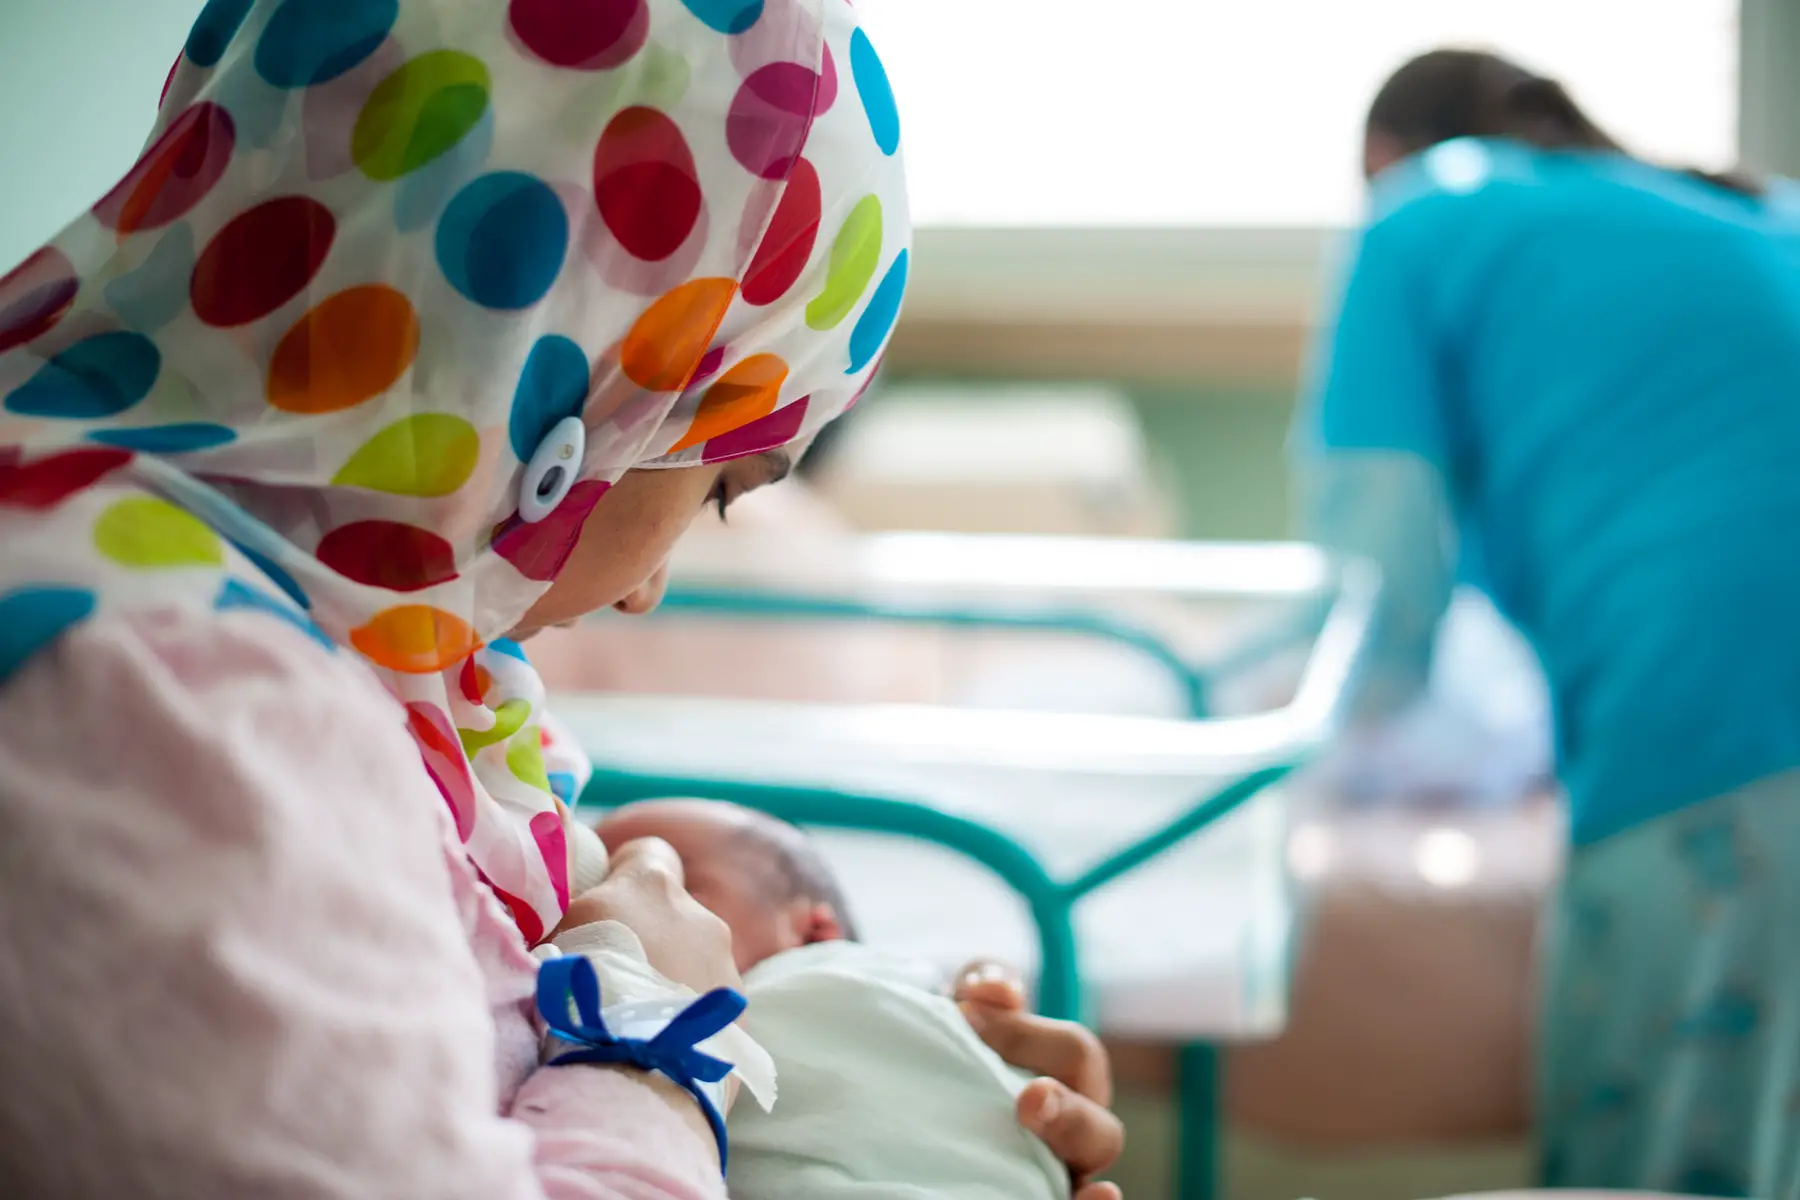 muslim mum breastfeeding newborn in hospital